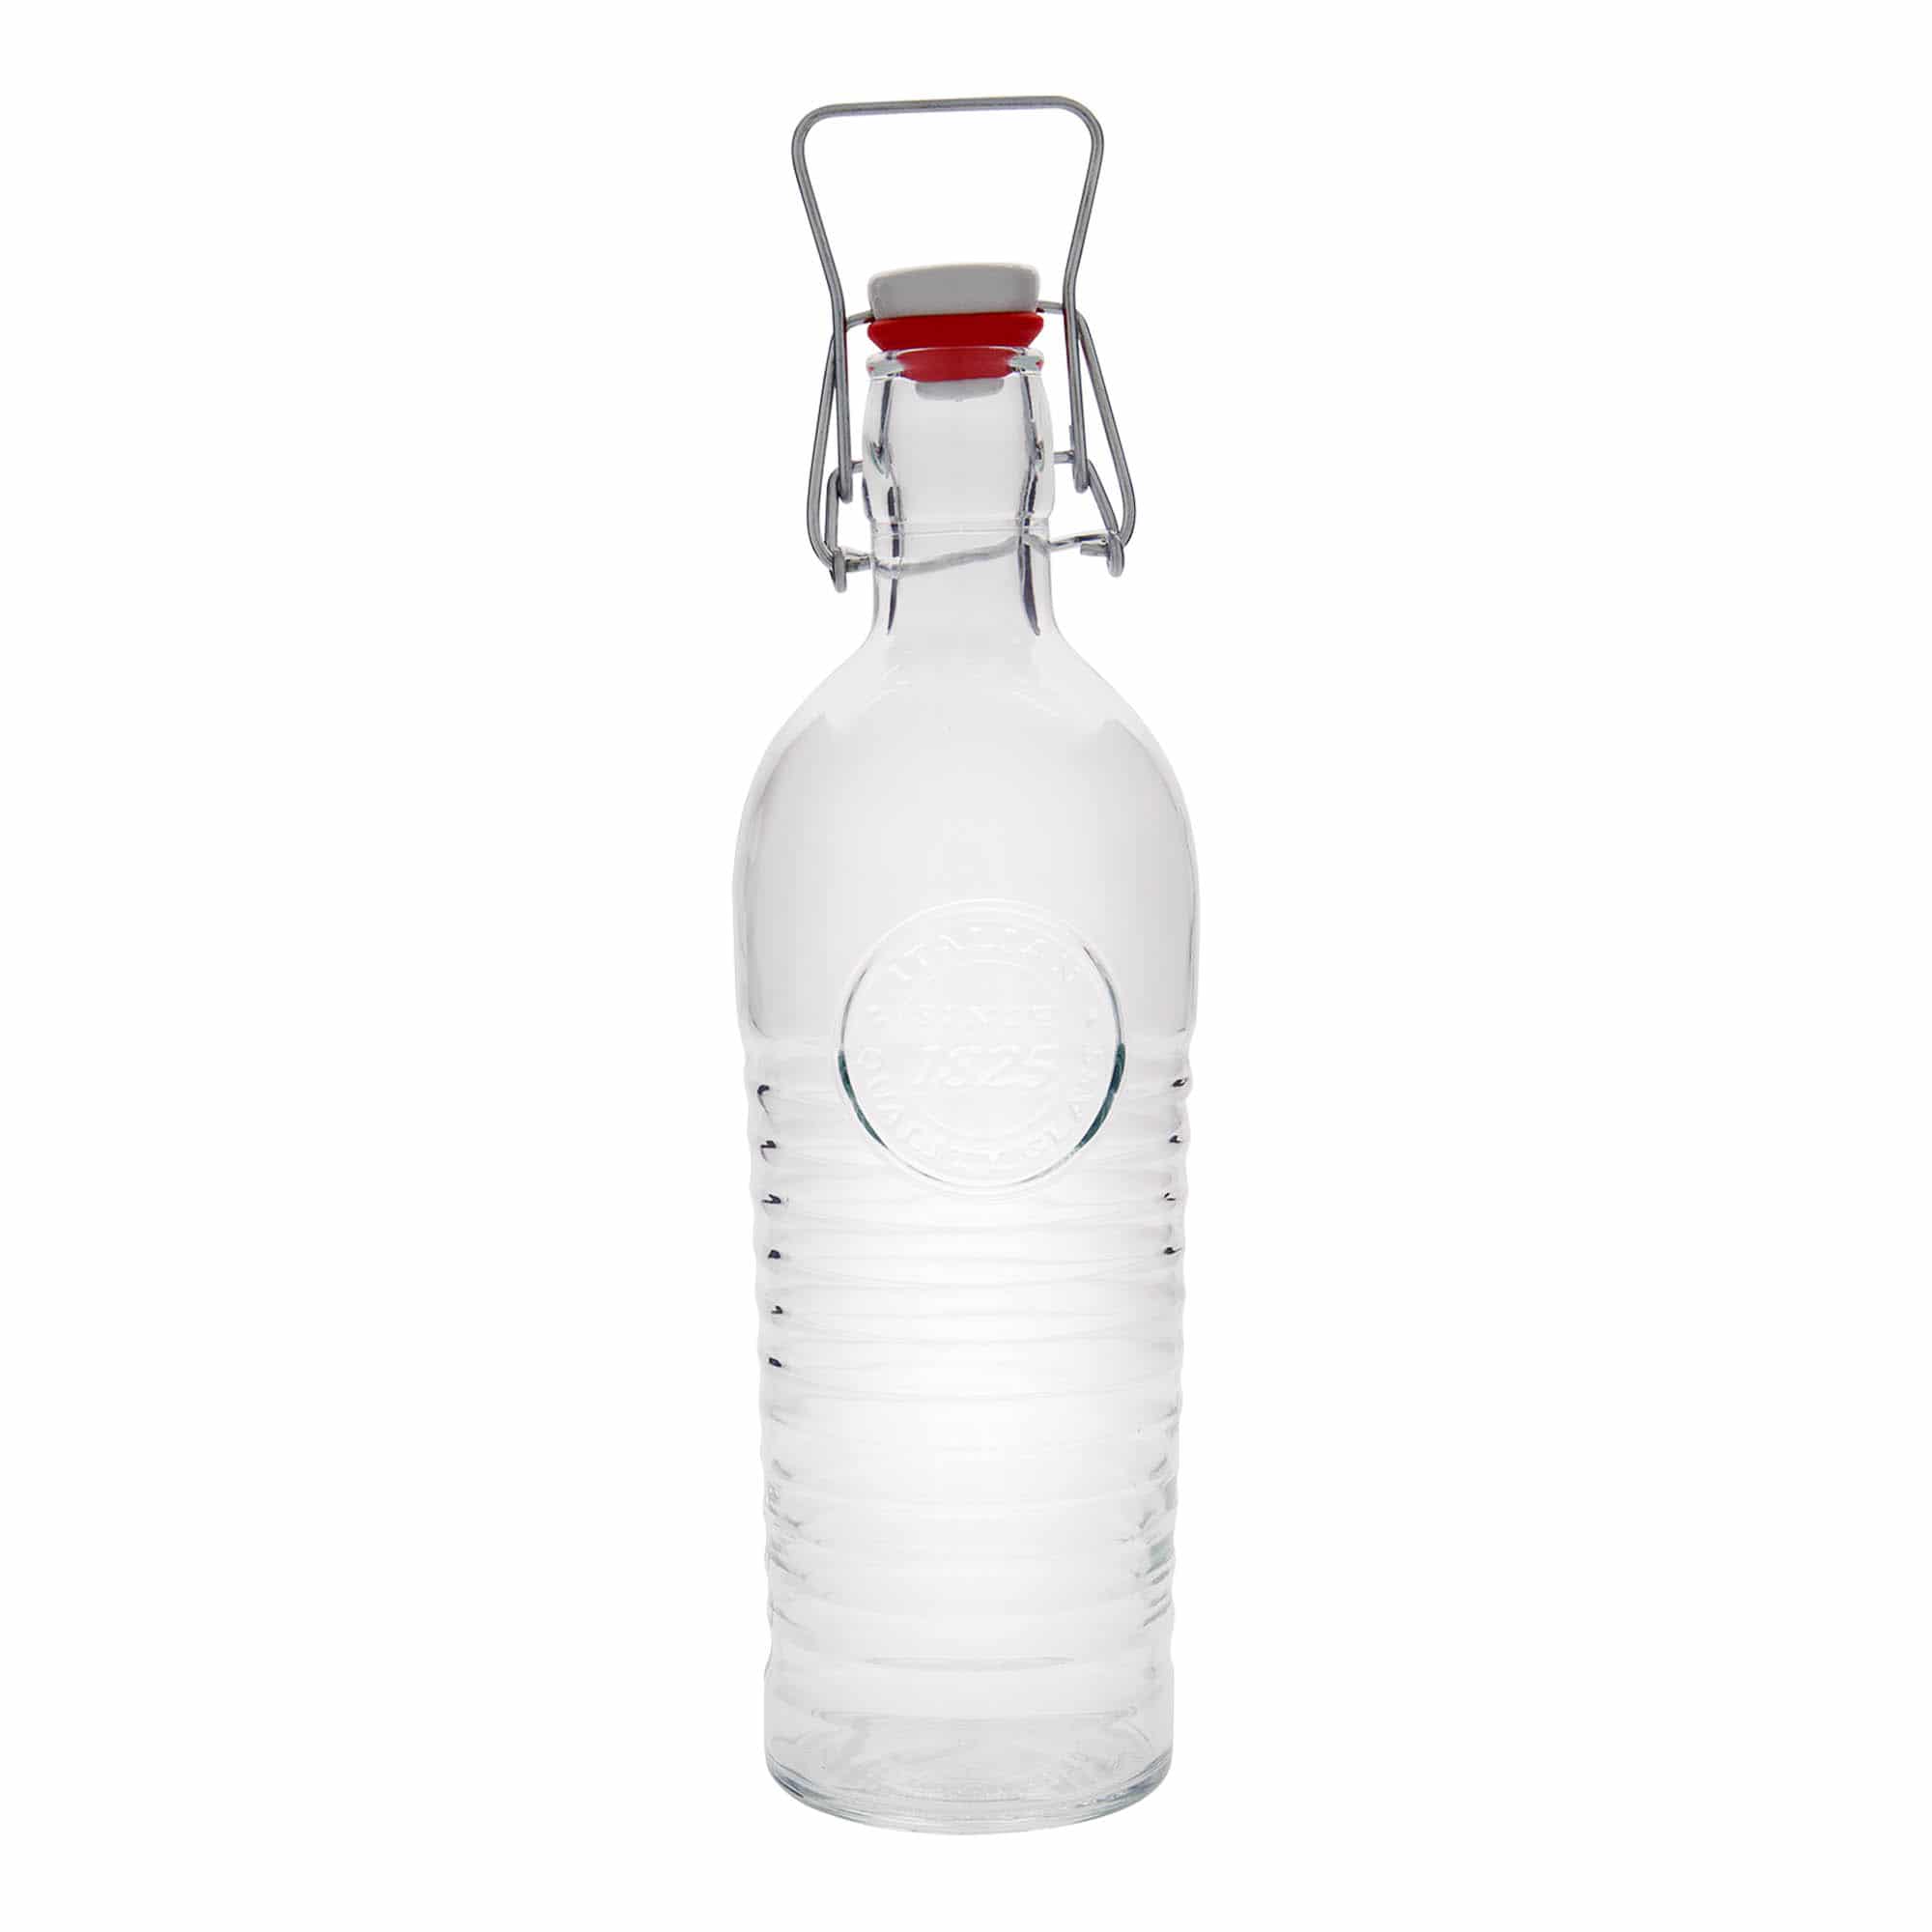 1,200 ml glass bottle 'Officina 1825', closure: swing top